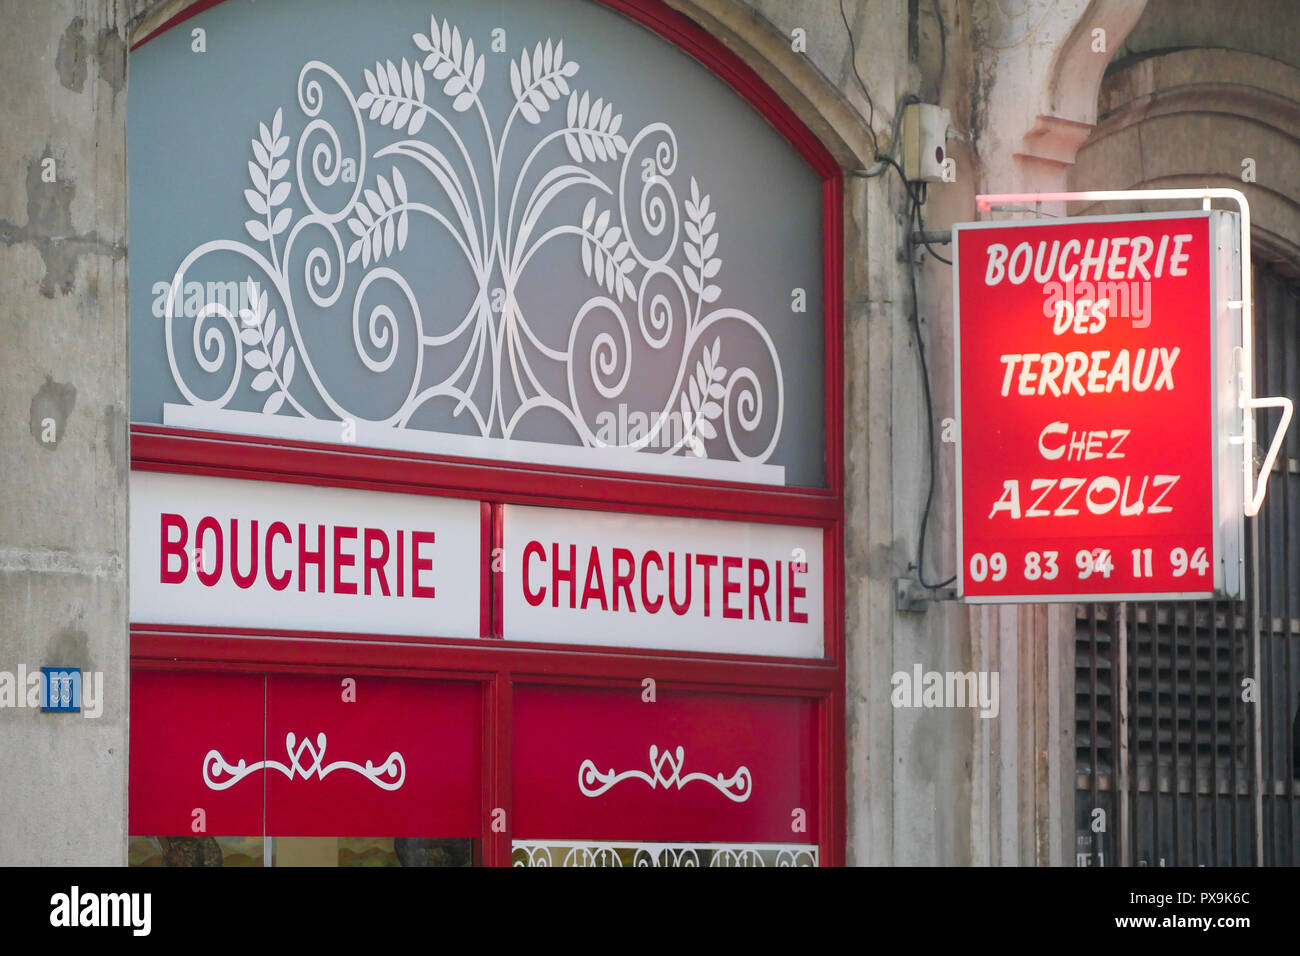 Halal Metzgerei, Lyon, Frankreich Stockfoto